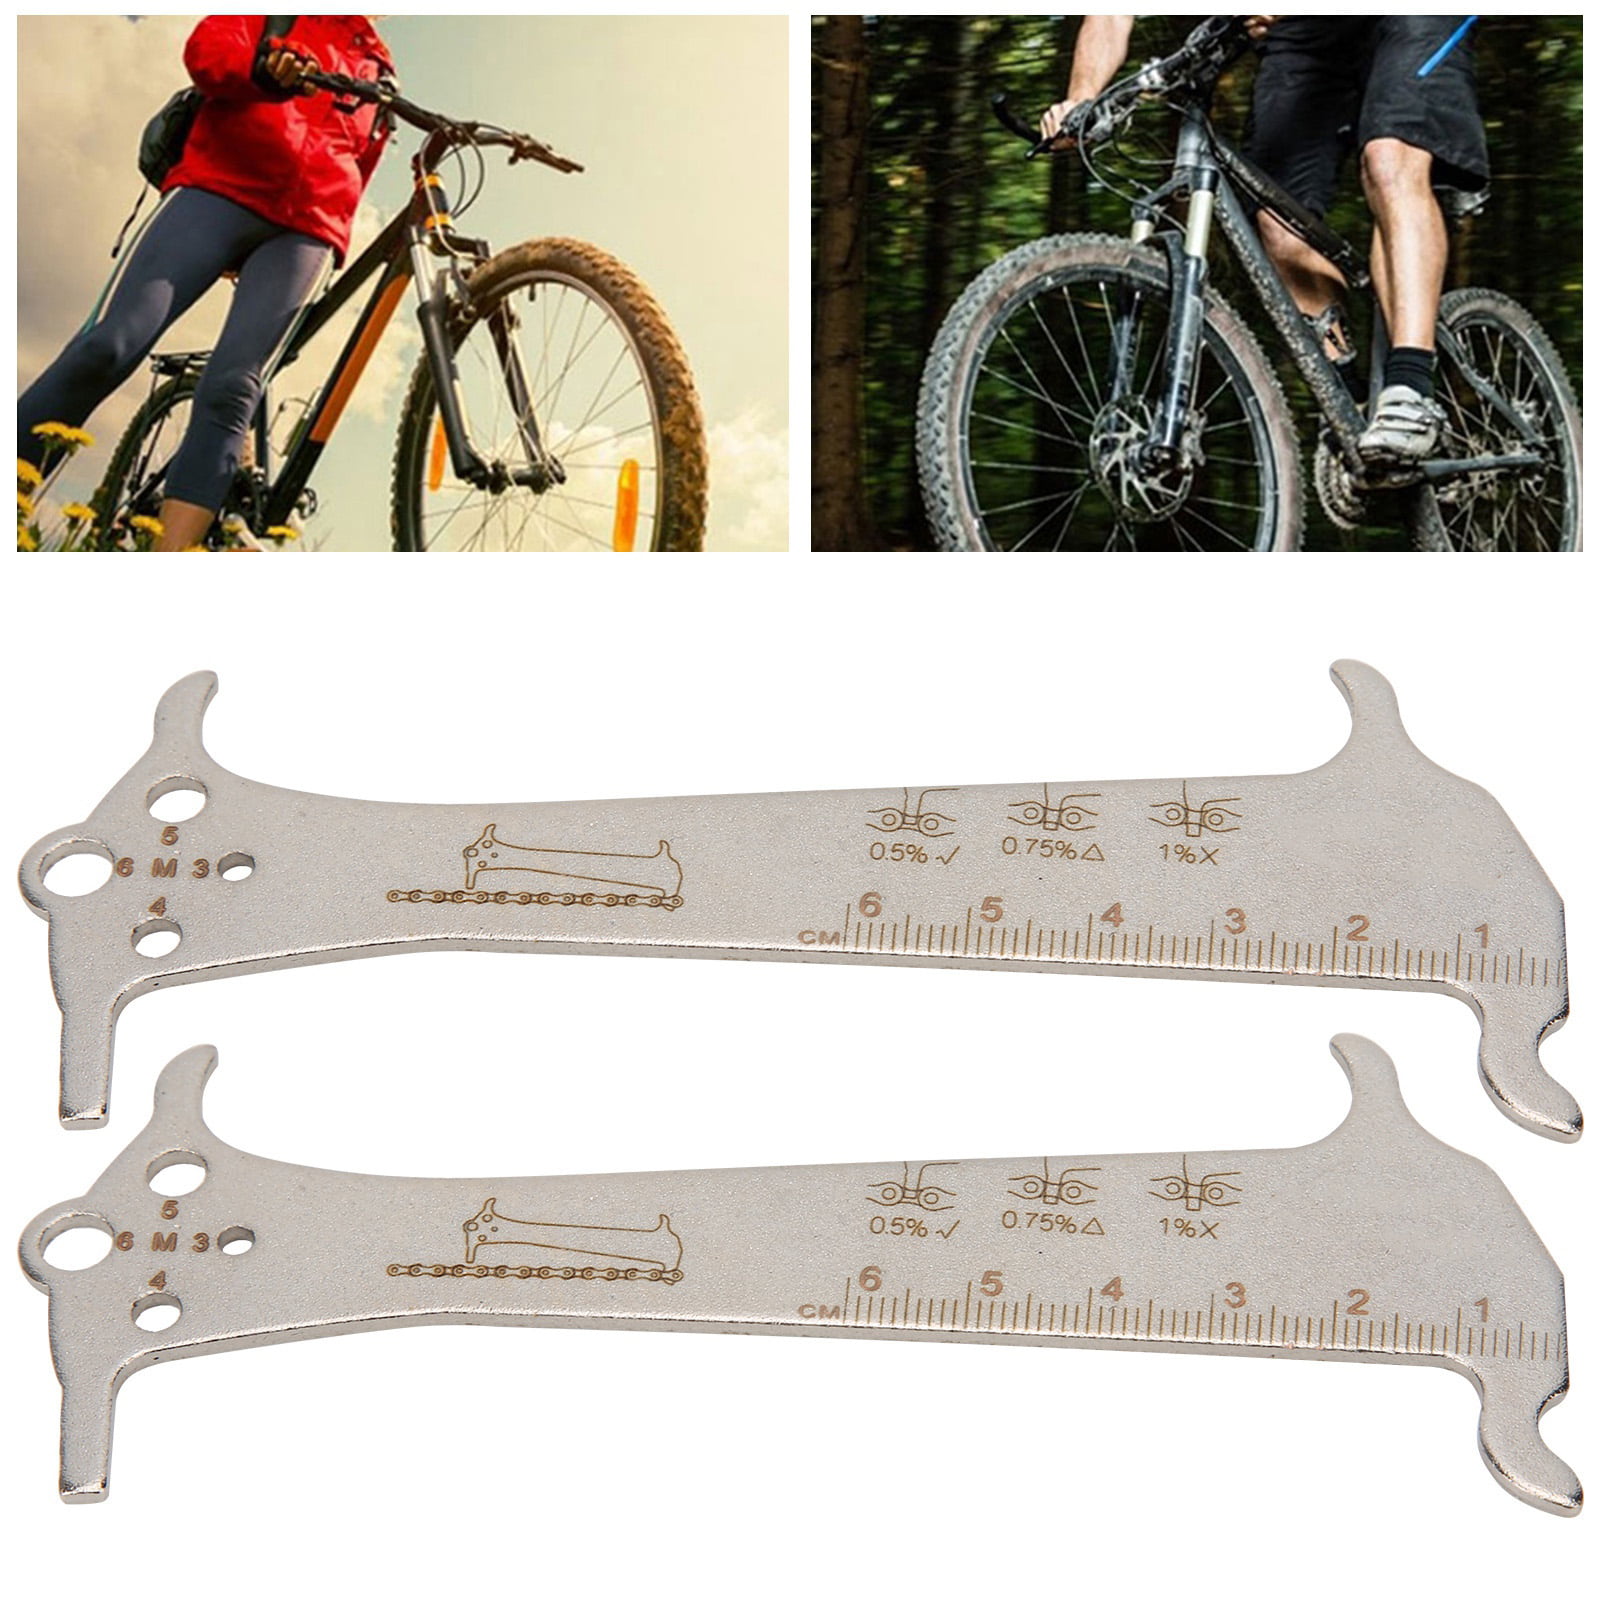 Bicycle Bike Chain Checker Wear Indicator Measure Tool Gauge Repair checker E Bu 